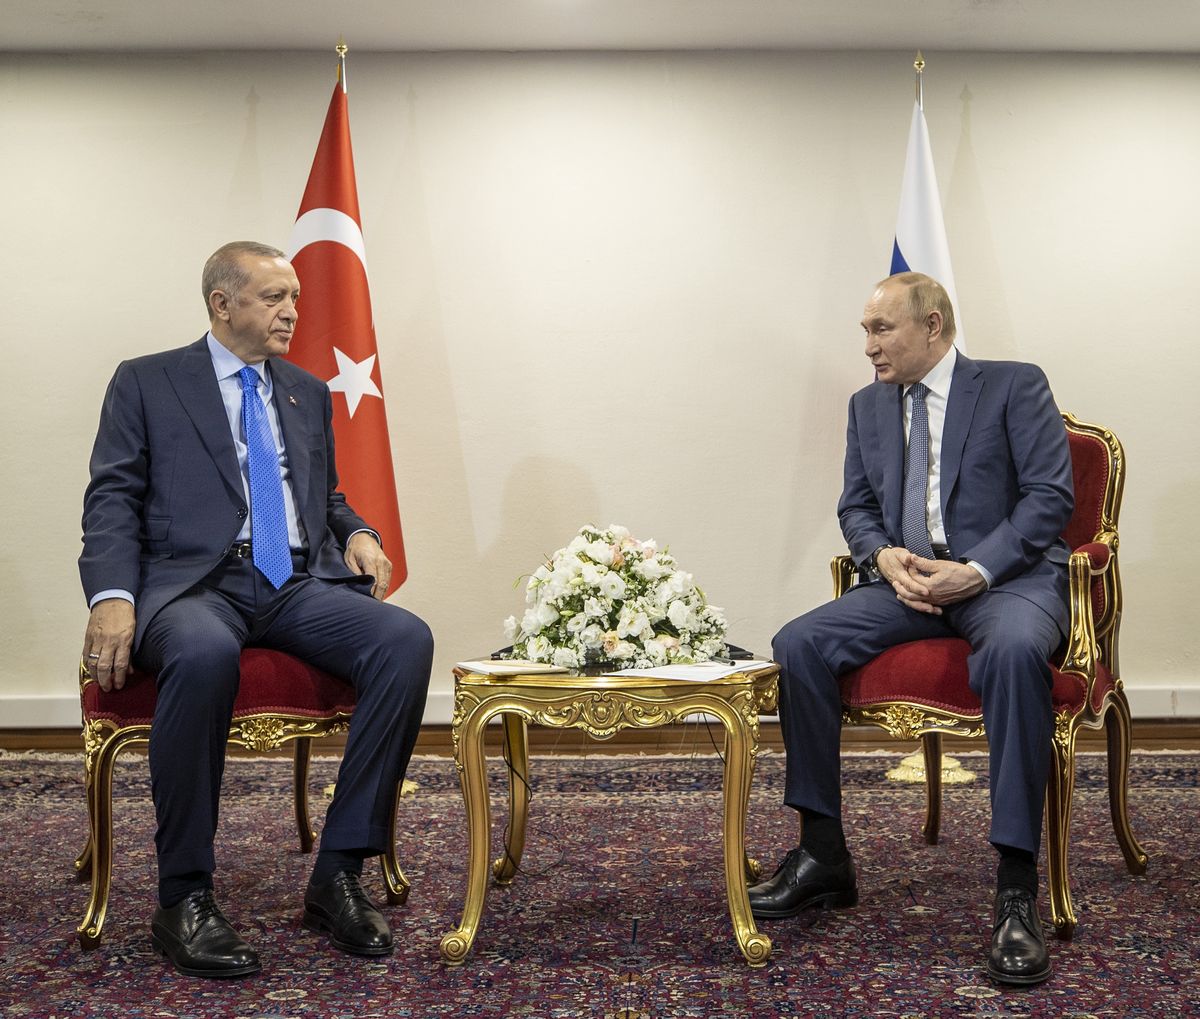 TEHRAN, IRAN - JULY 19: Turkish President Recep Tayyip Erdogan (L) meets Russian President Vladimir Putin (R) in Tehran, Iran on July 19, 2022. (Photo by Ali Balikci/Anadolu Agency via Getty Images)